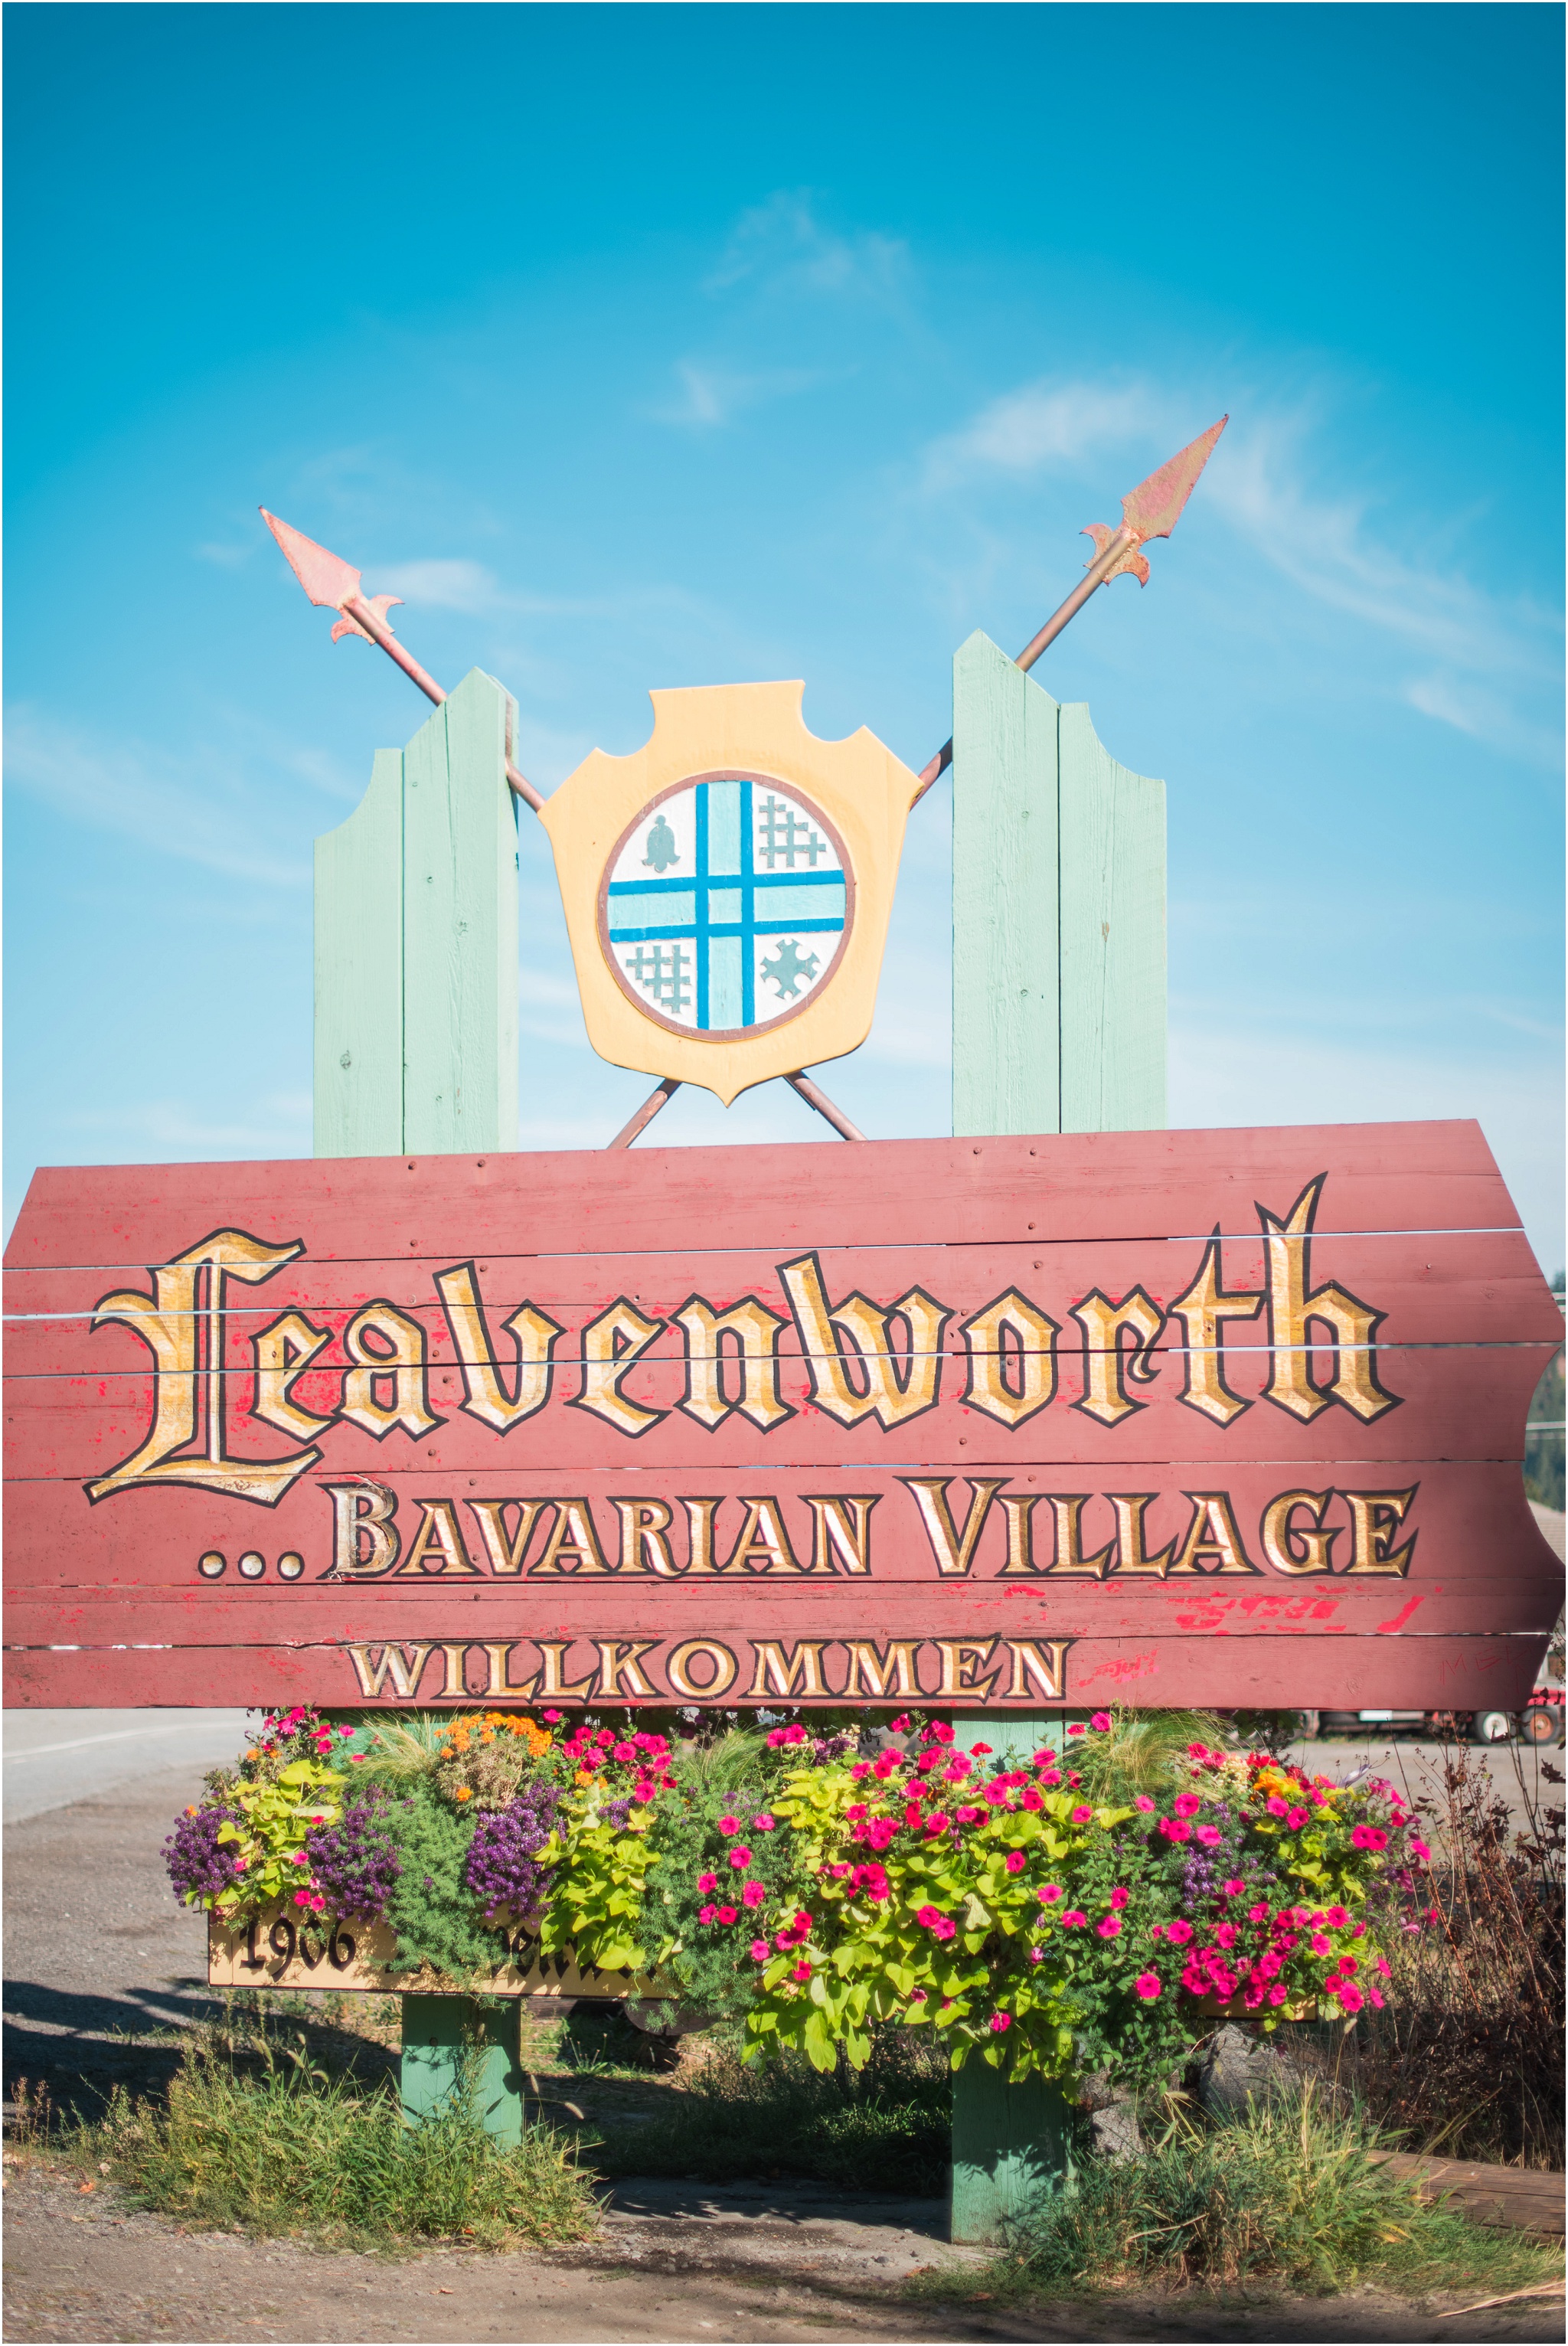 Pine River Ranch Leavenworth sign photo